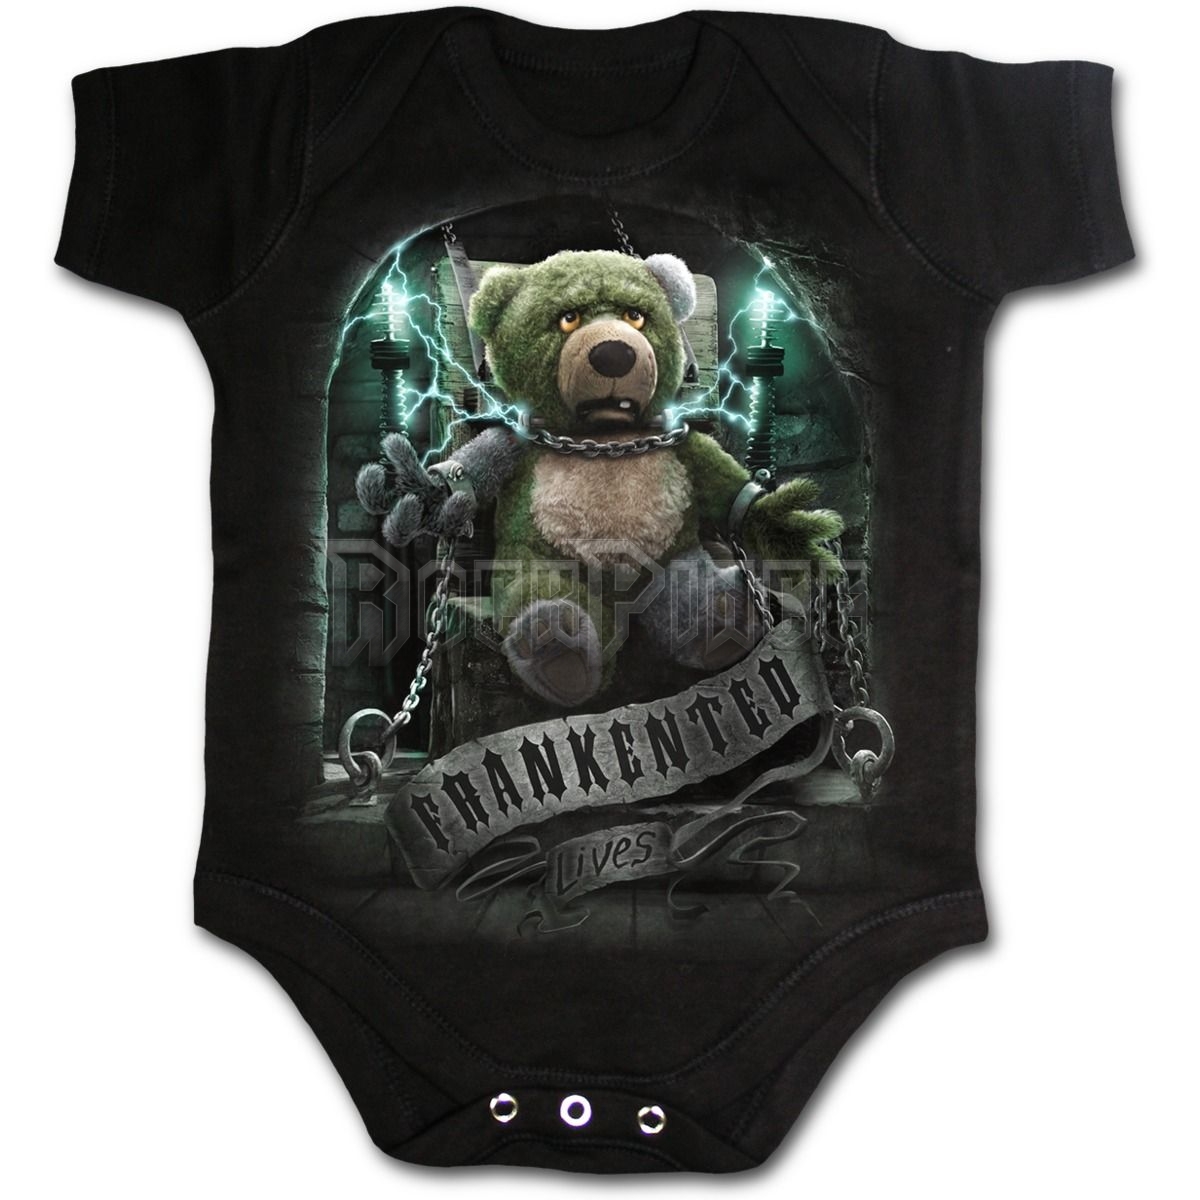 FRANKENTED - Baby Sleepsuit Black (Plain) - F037K002